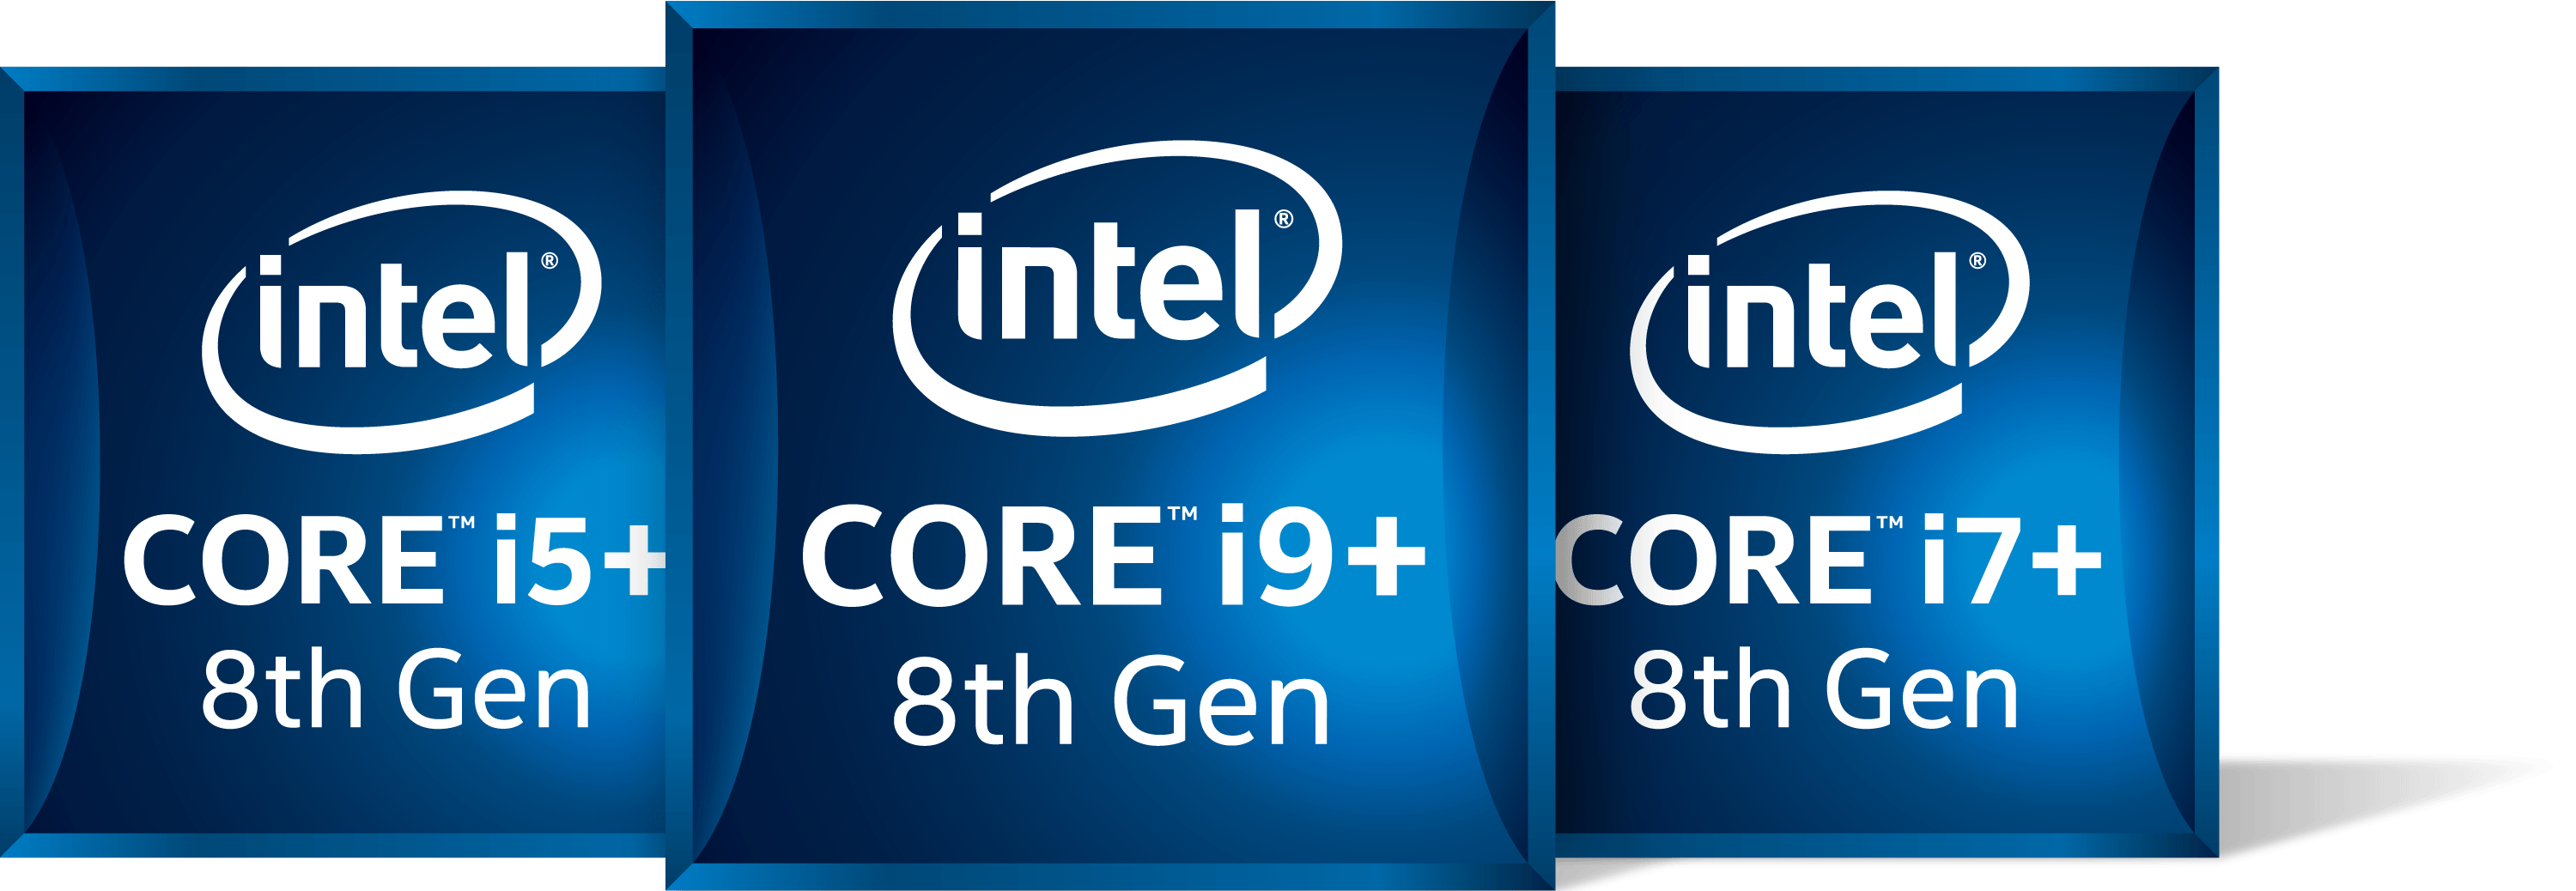 Intel Core I5 Logo - New Optane Branding: Core i9+, Core i7+, Core i- Intel Expands